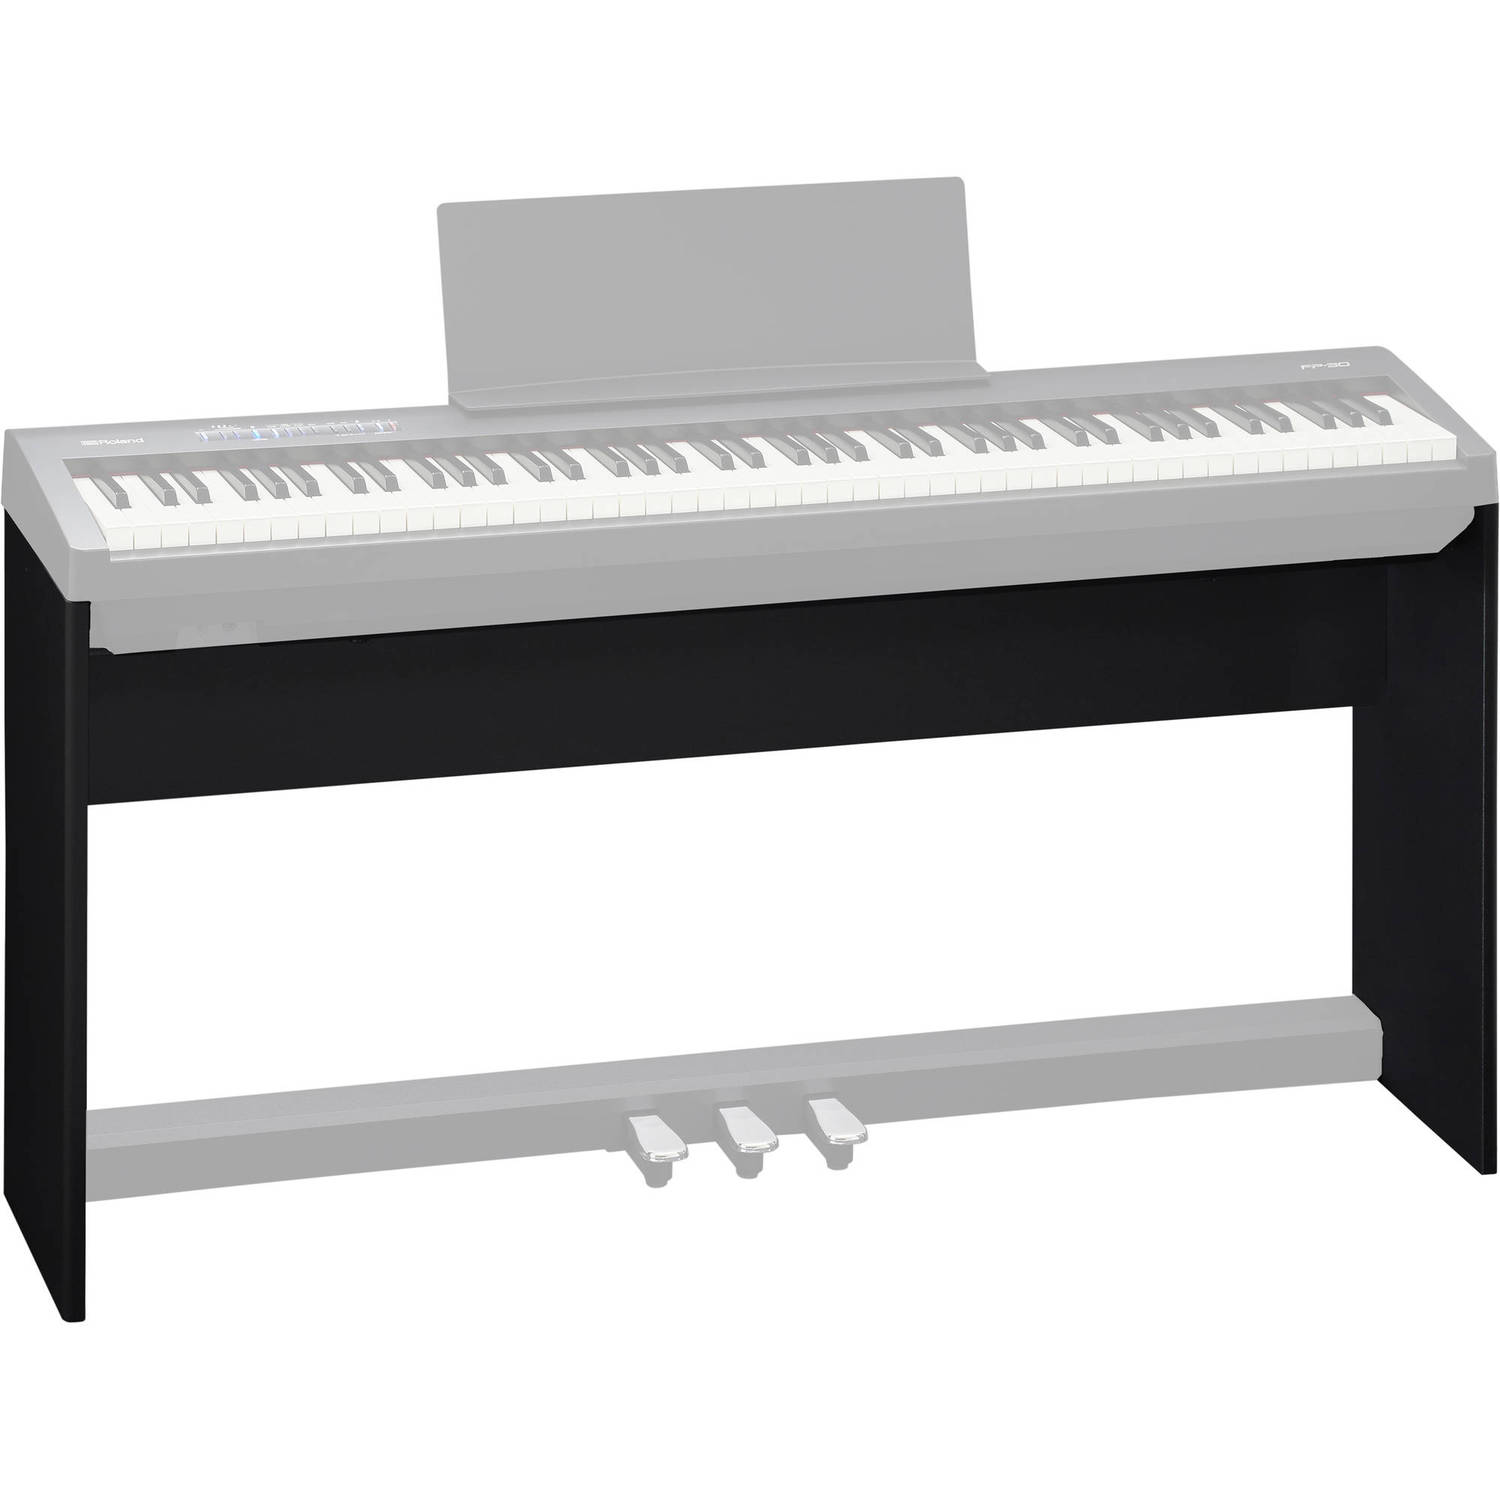 Roland Ksc 70 Stand For Fp 30 Digital Piano Black Ksc 70 Bk